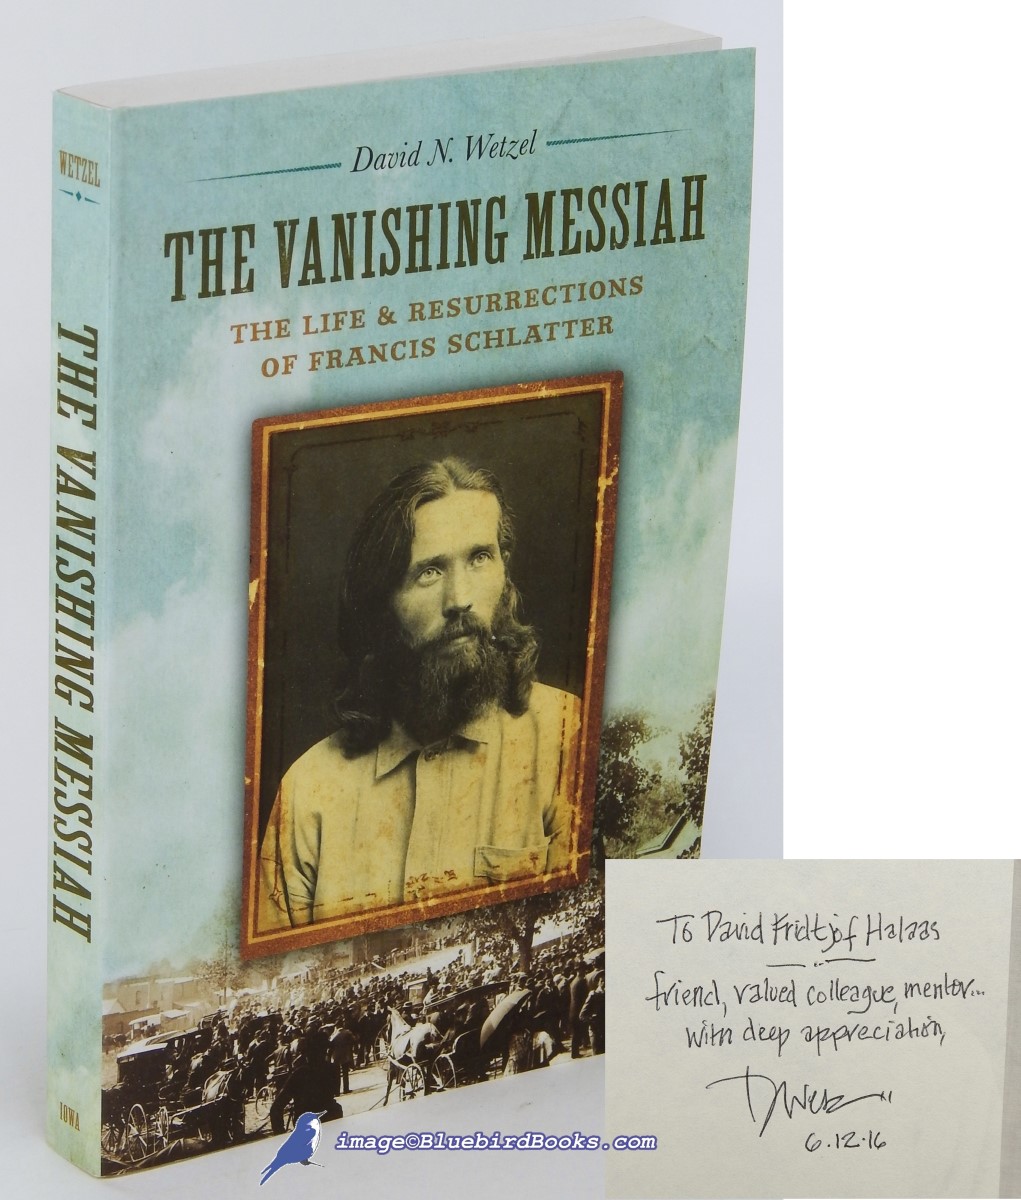 WETZEL, DAVID N. - The Vanishing Messiah: The Life and Resurrection of Francis Schlatter